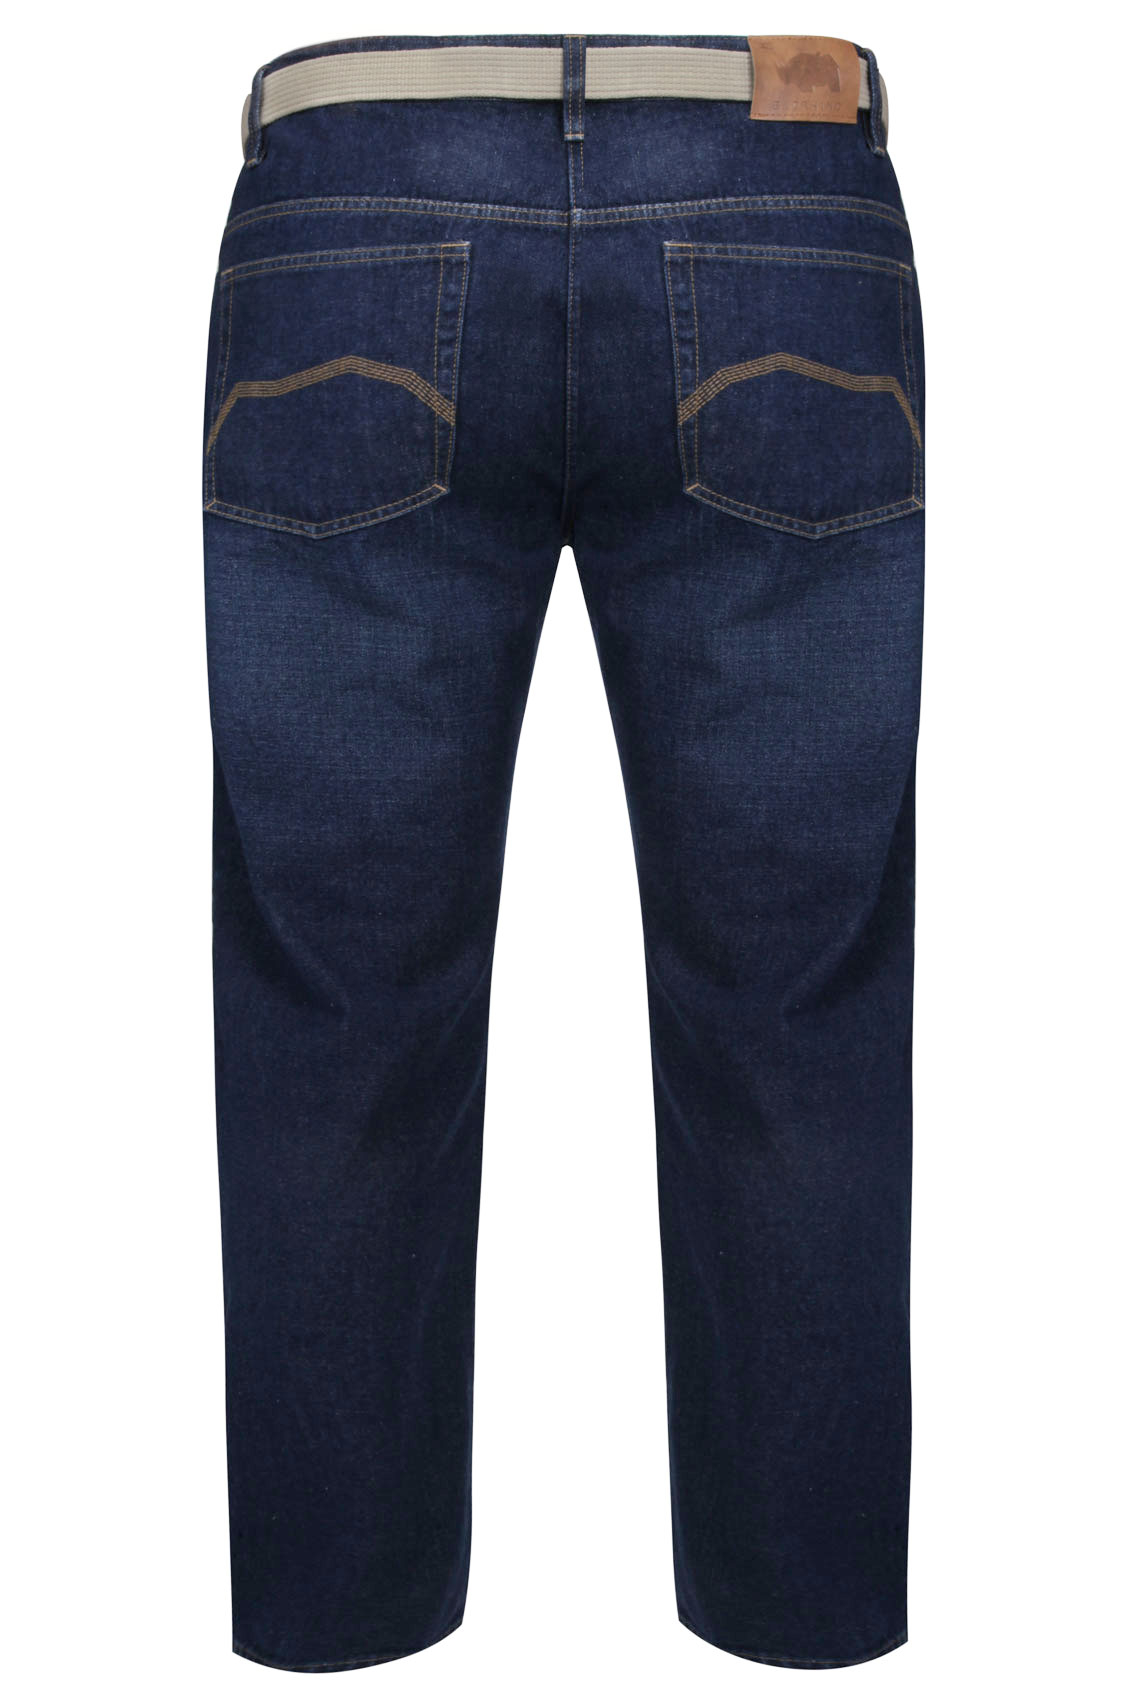 BadRhino Indigo Blue Denim Comfort Jeans With Light Brown Belt